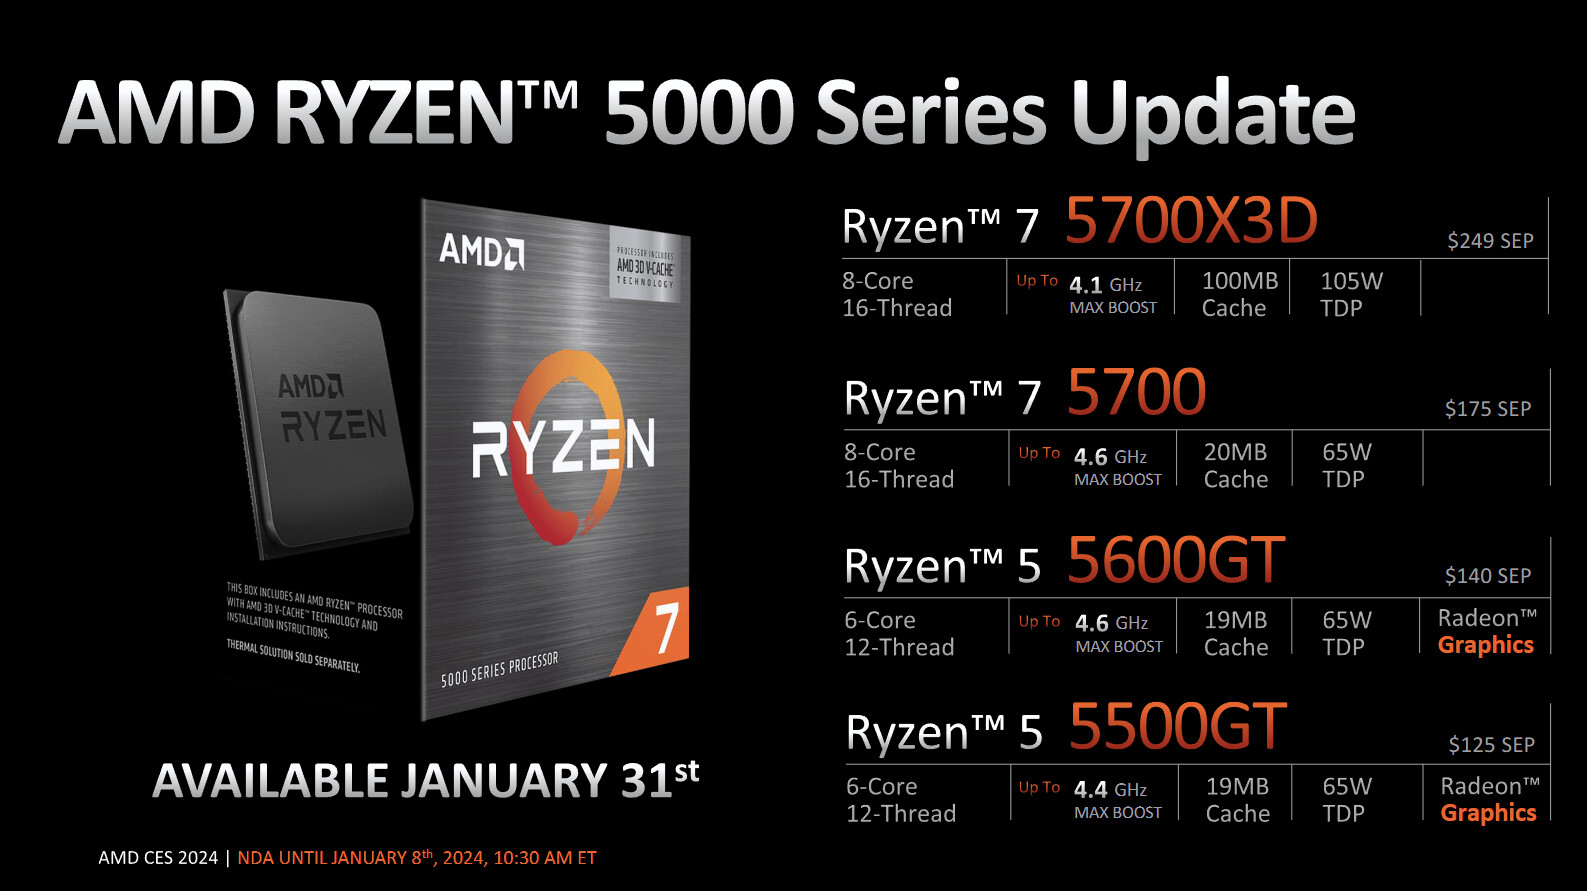 Buy the AMD Ryzen 5 5600X CPU 6 Core / 12 Thread - Max Boost 4.6